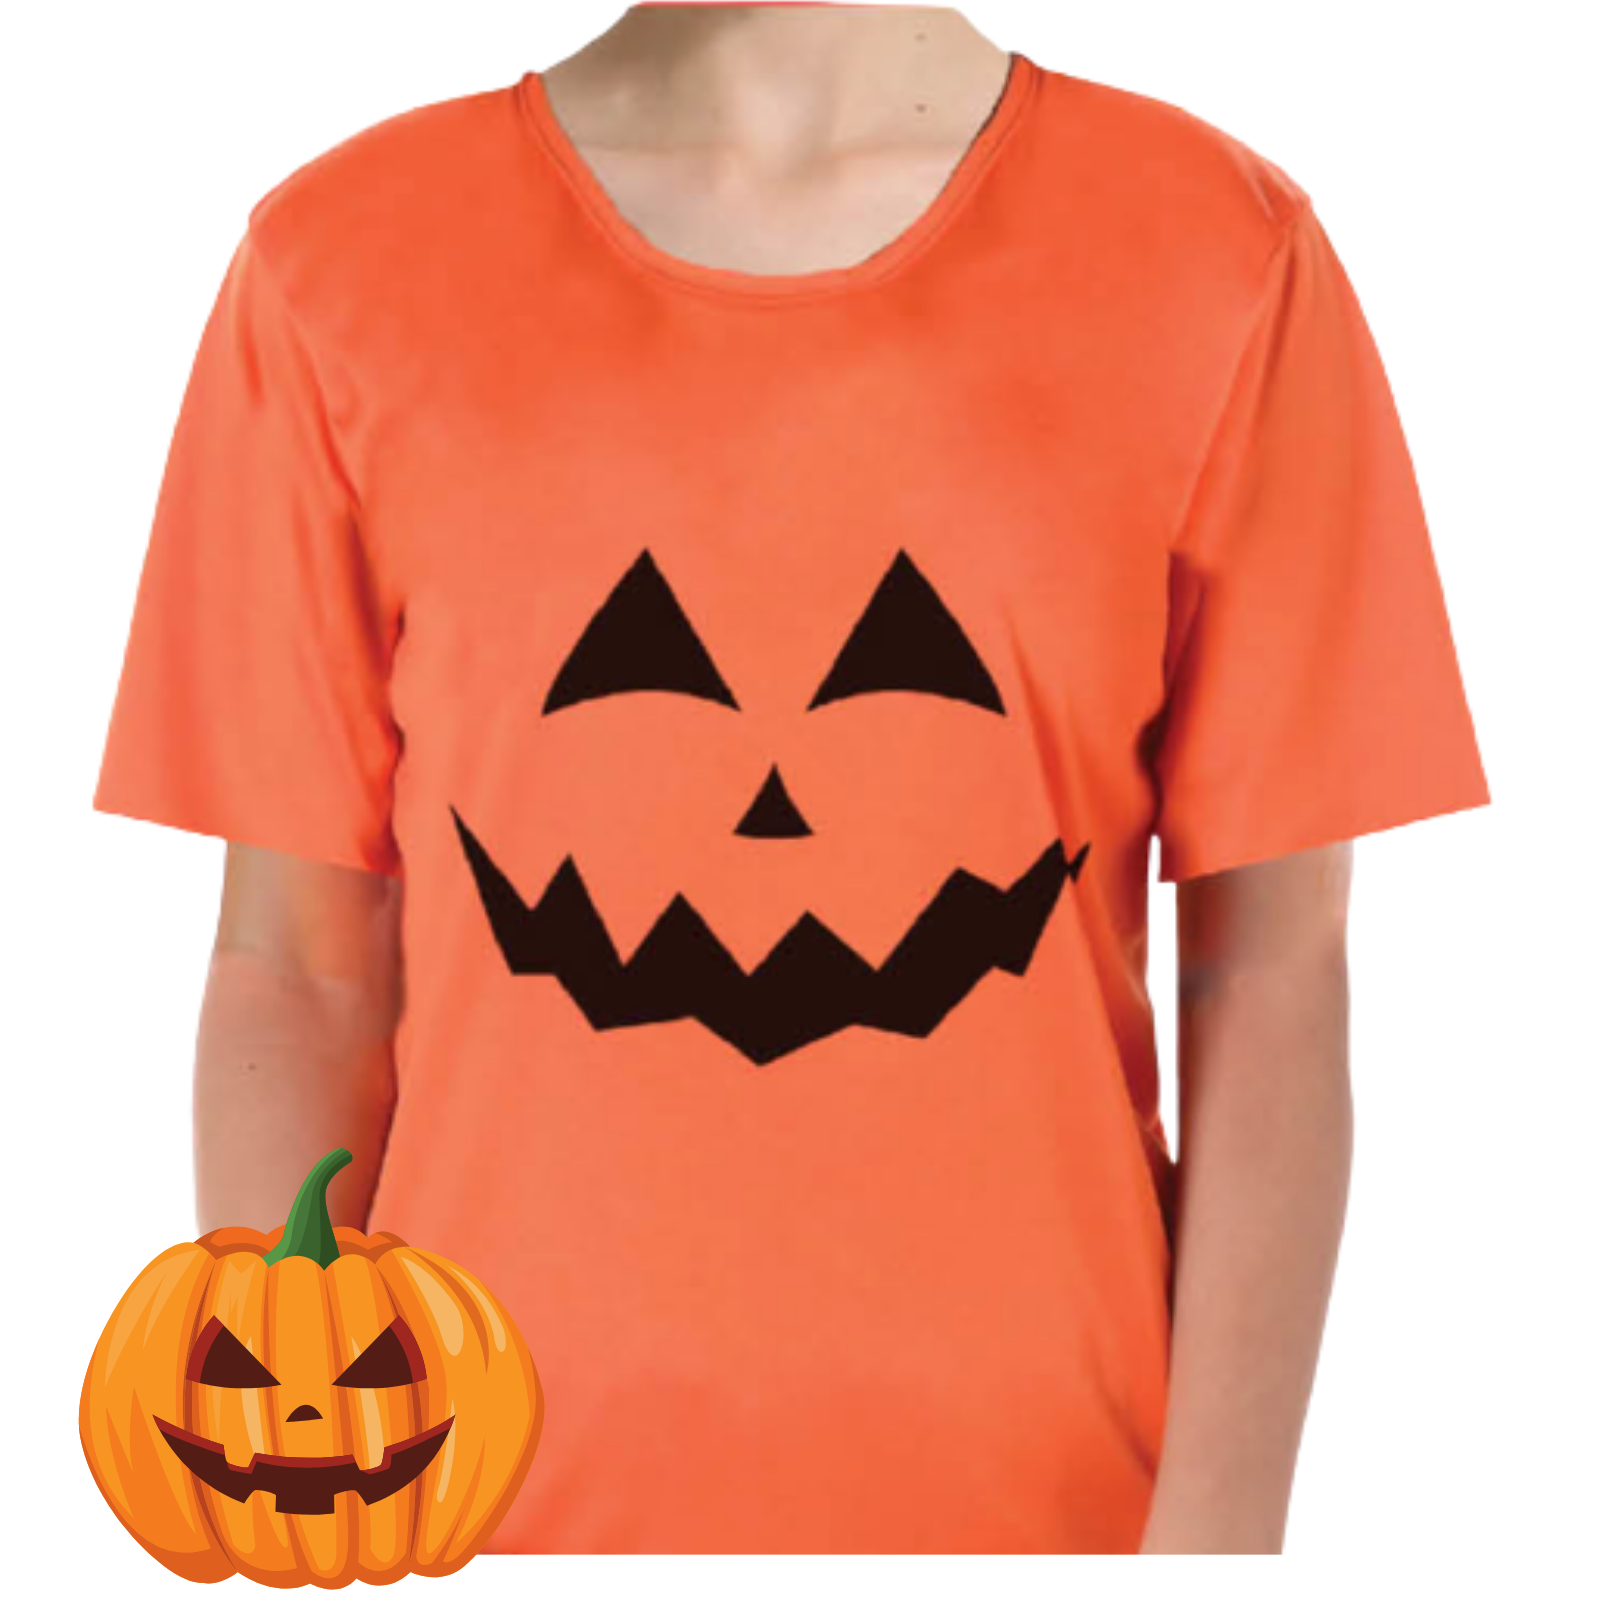 Kids Halloween T-Shirt Pumpkin Childrens Orange Jack O'Lantern Top - S (4-6 Years Old)